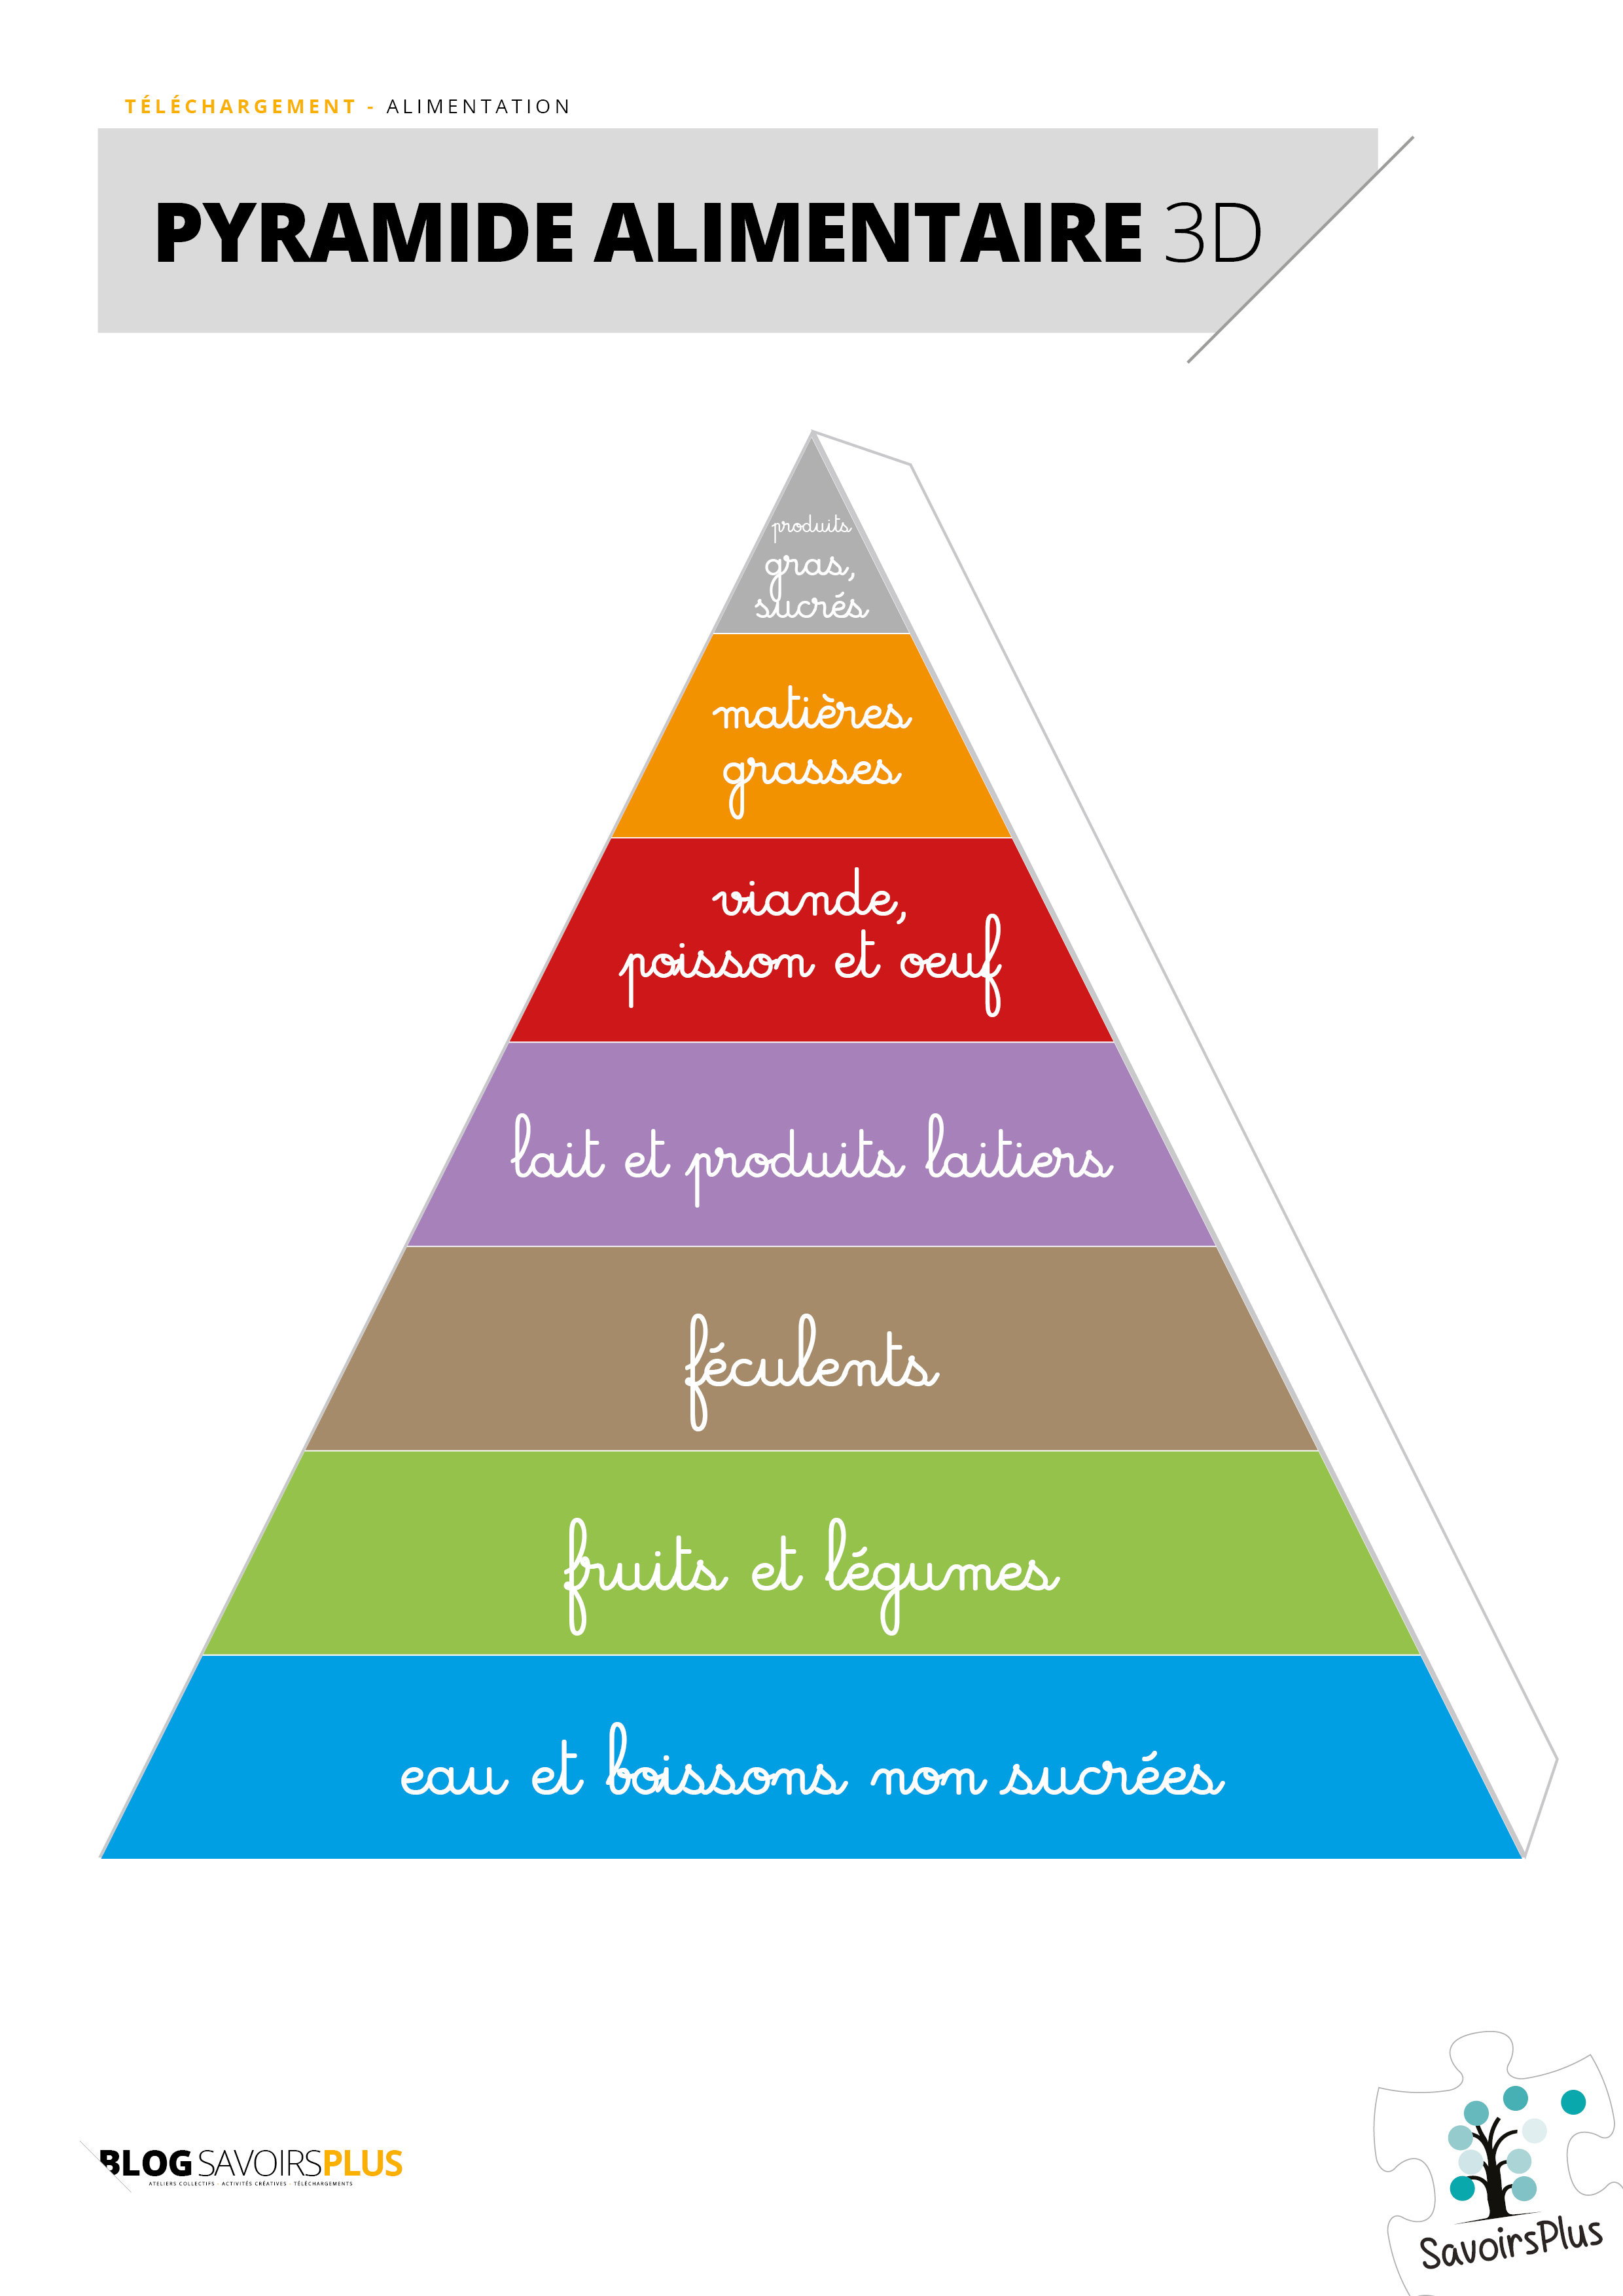 La Pyramide Alimentaire Permanence Et Mutations Dun Objet Polymorphe ...